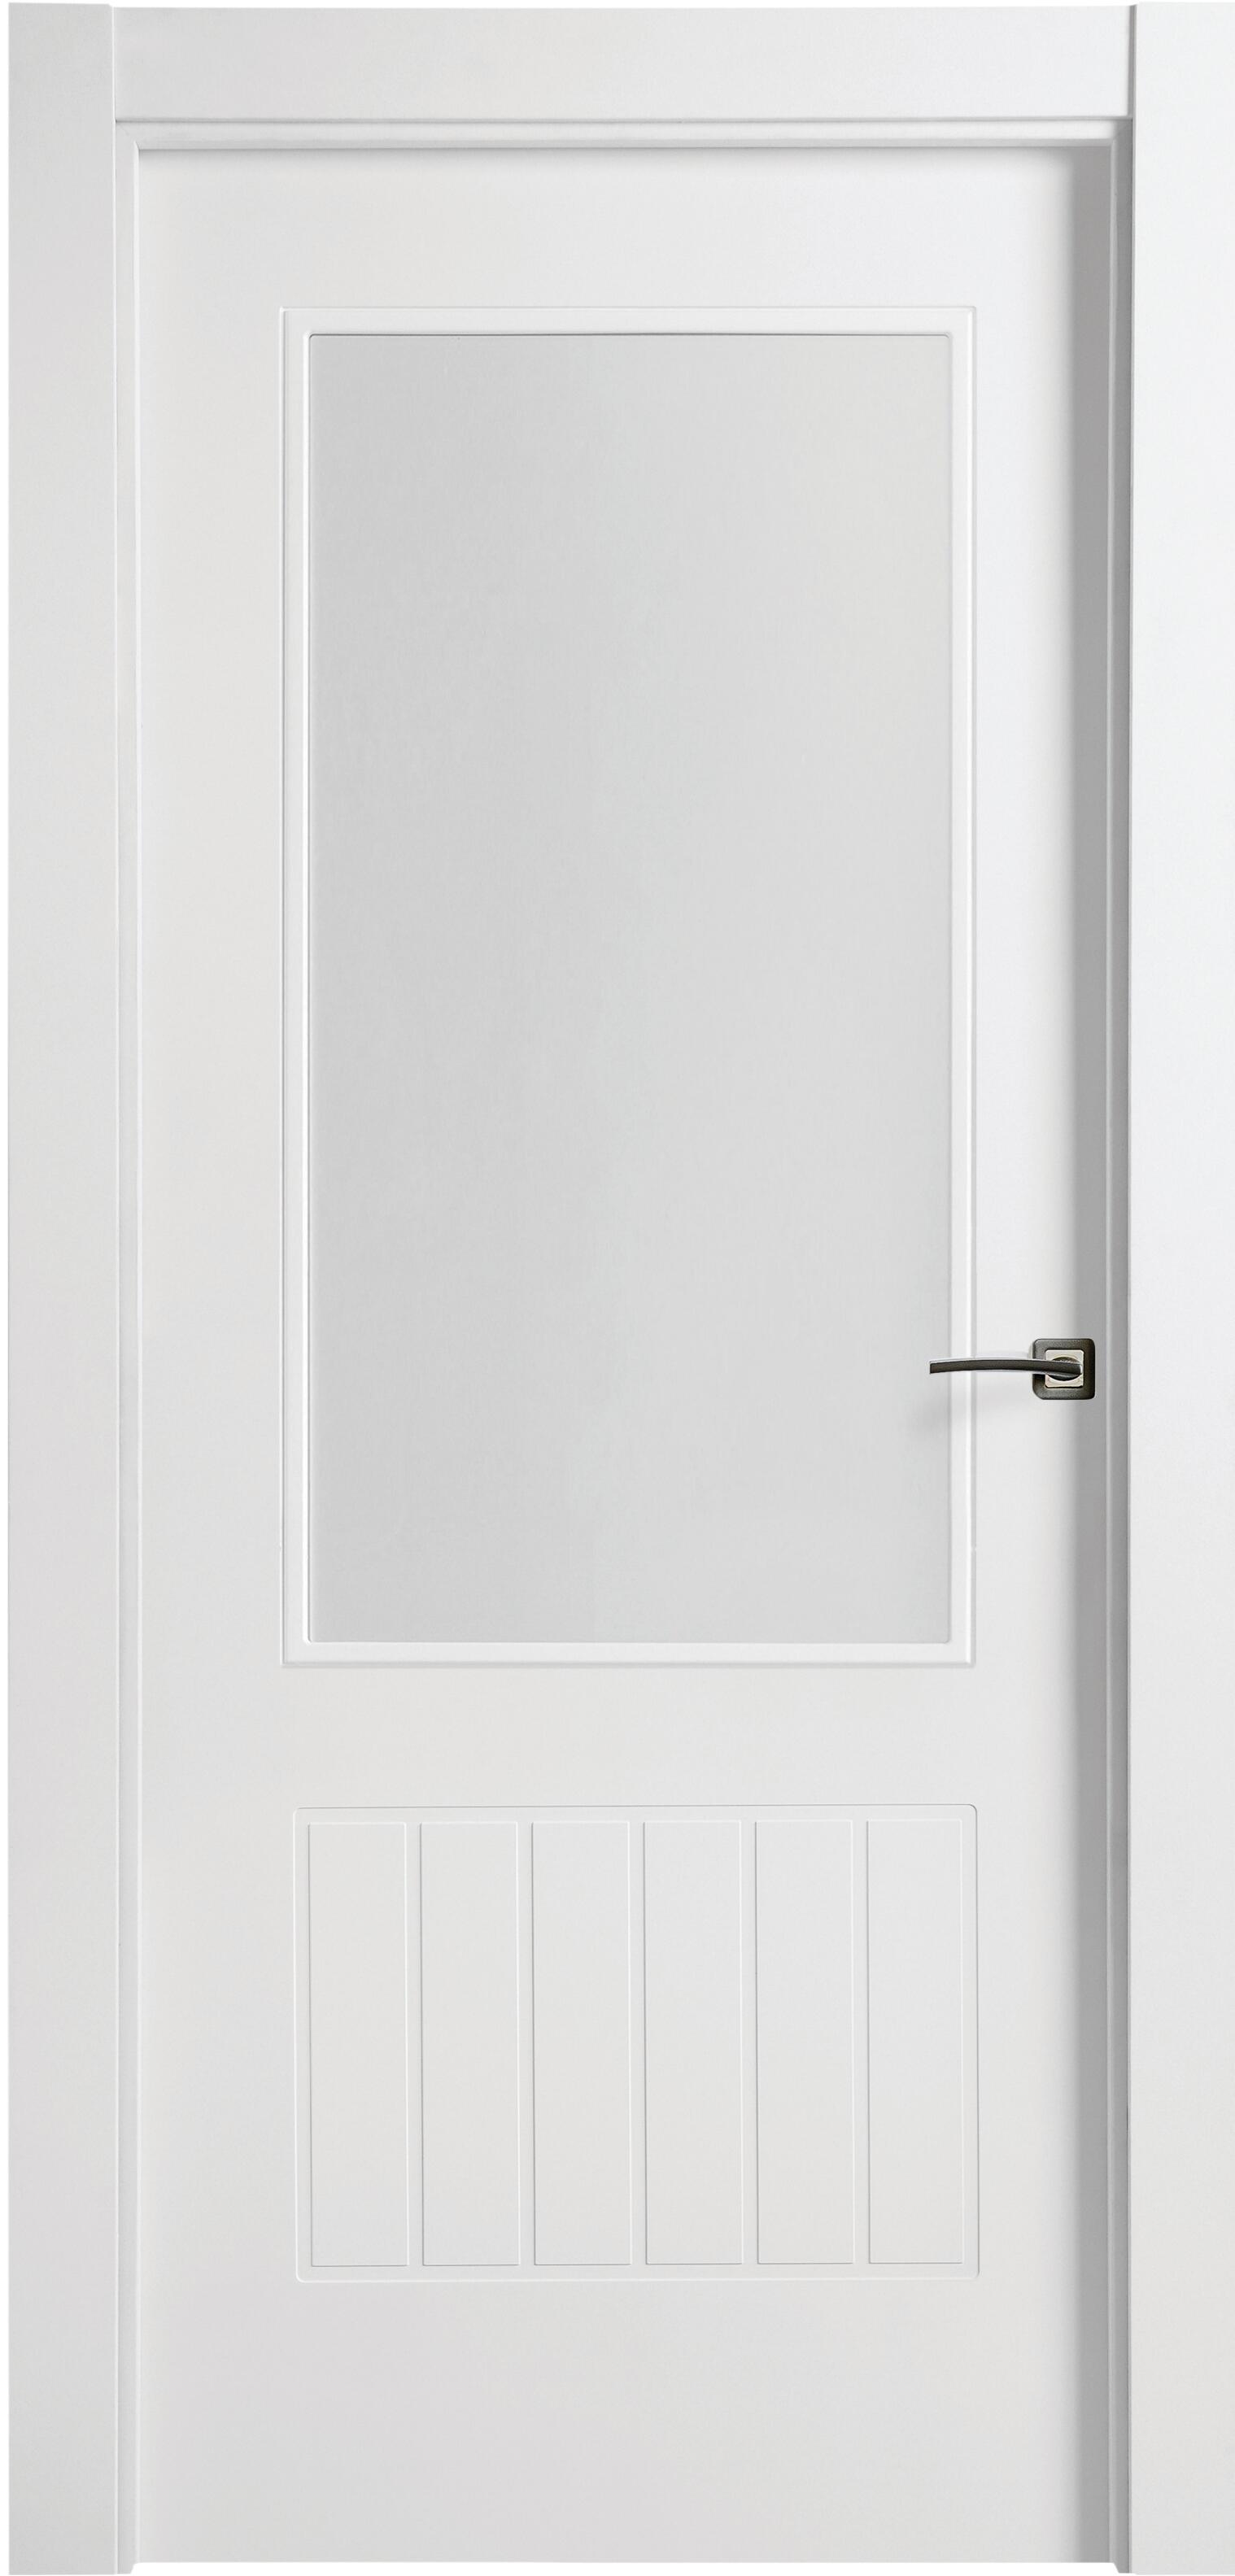 Puerta madison plus blanco apertura izquierda con cristal de 11x 92.5 cm